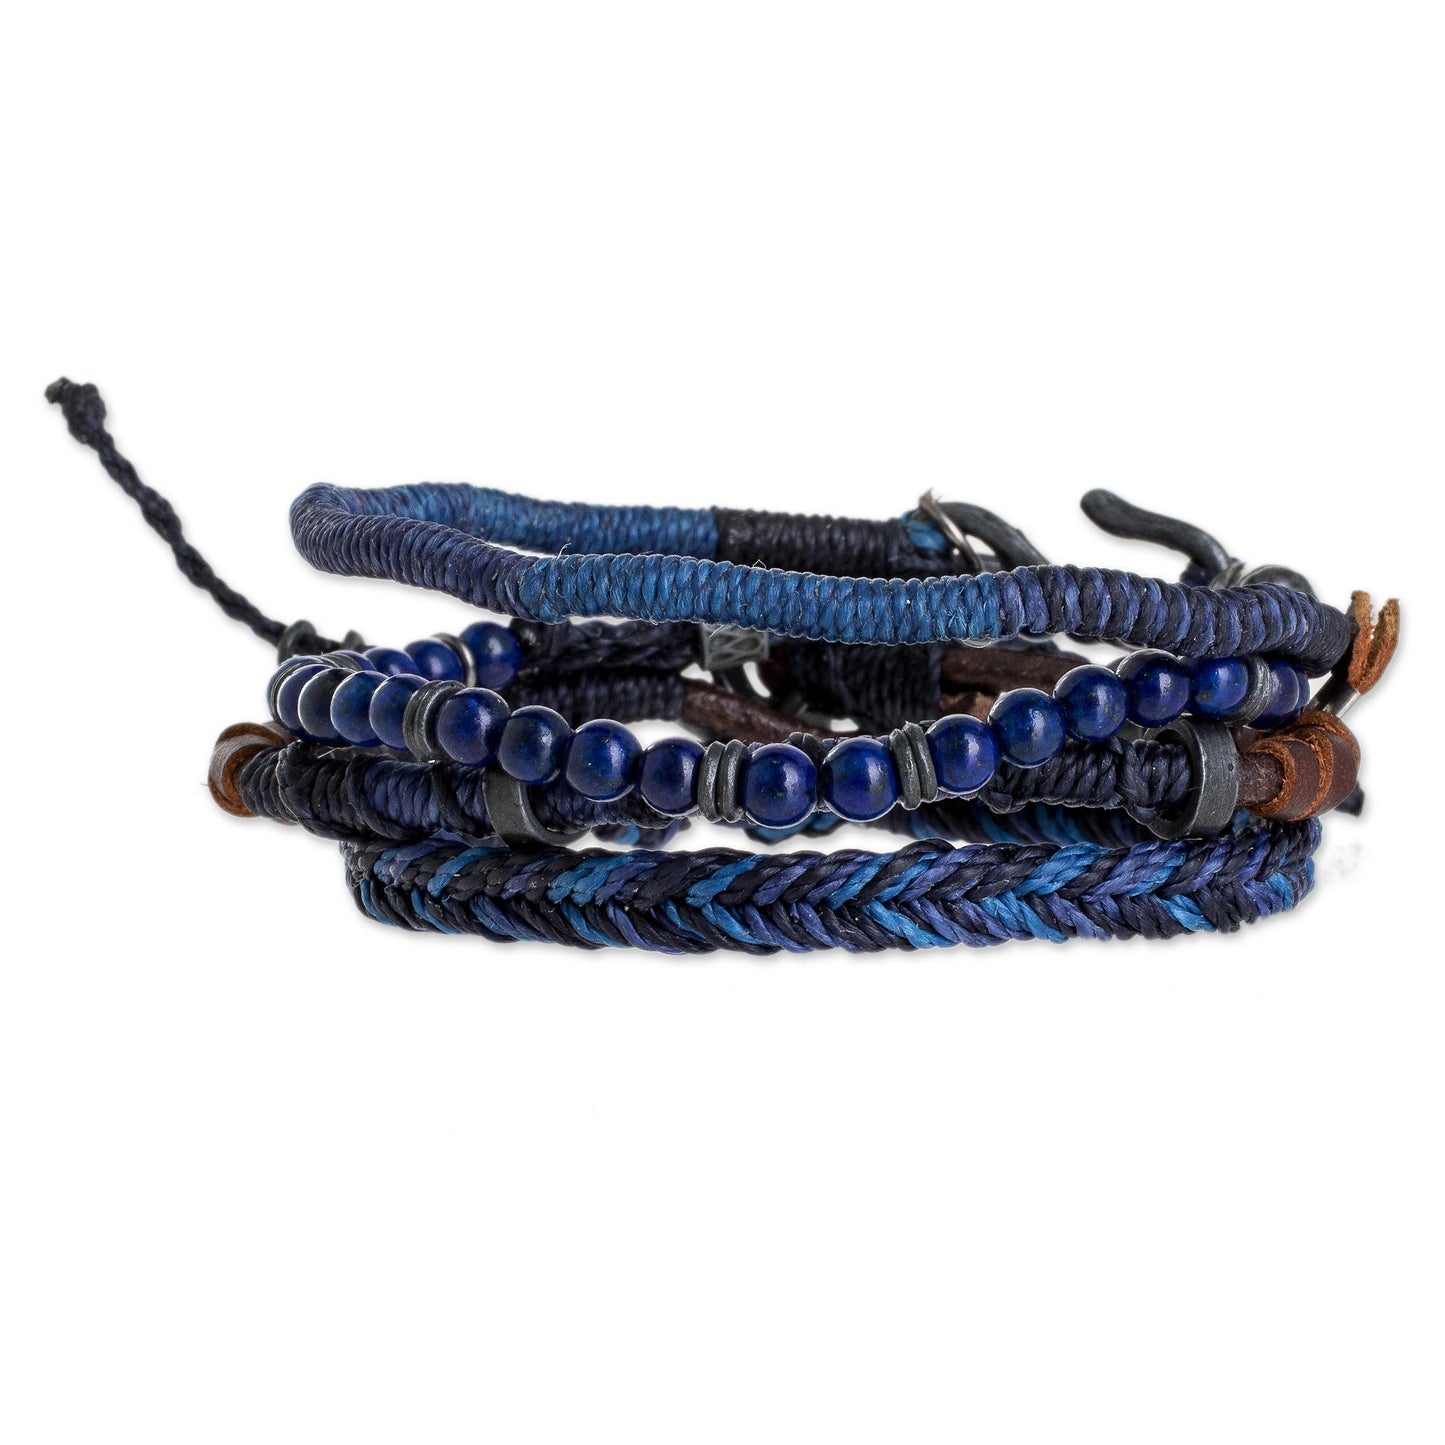 Boho Friends Lapis Lazuli and Leather Bracelets from Guatemala (Set of 4)